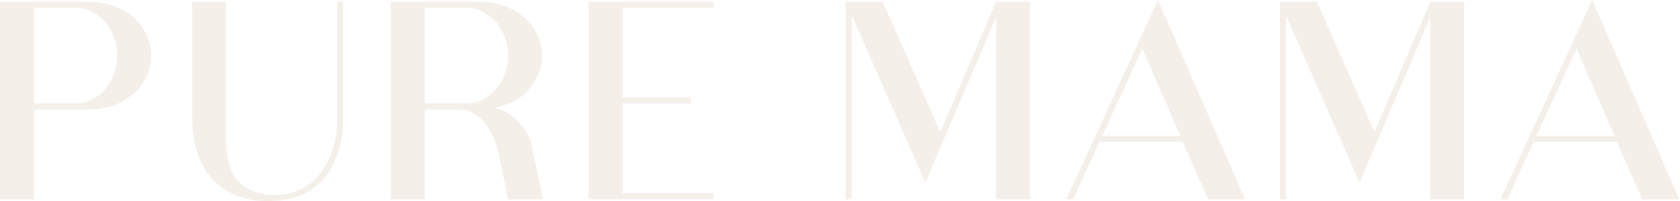 files/pm-logo.png